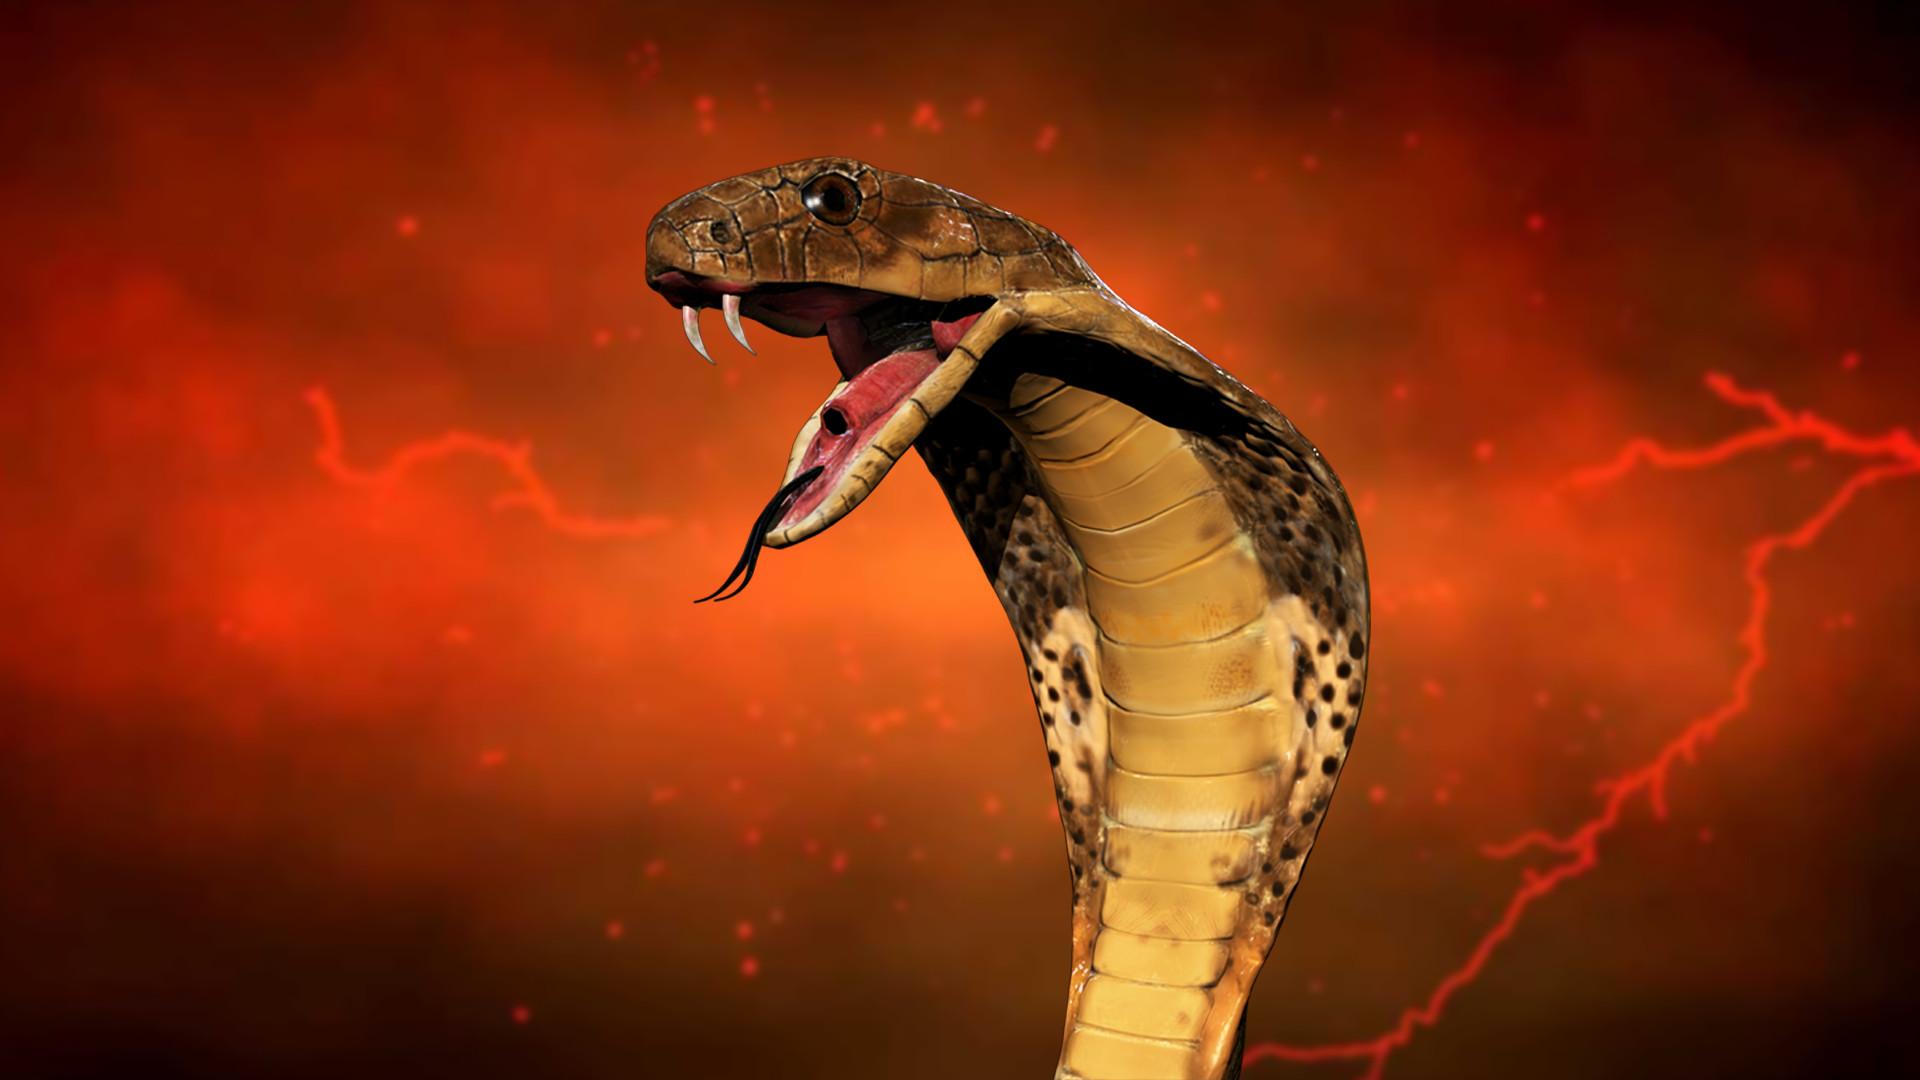 3D King Cobra Snake Wallpaper, image collections